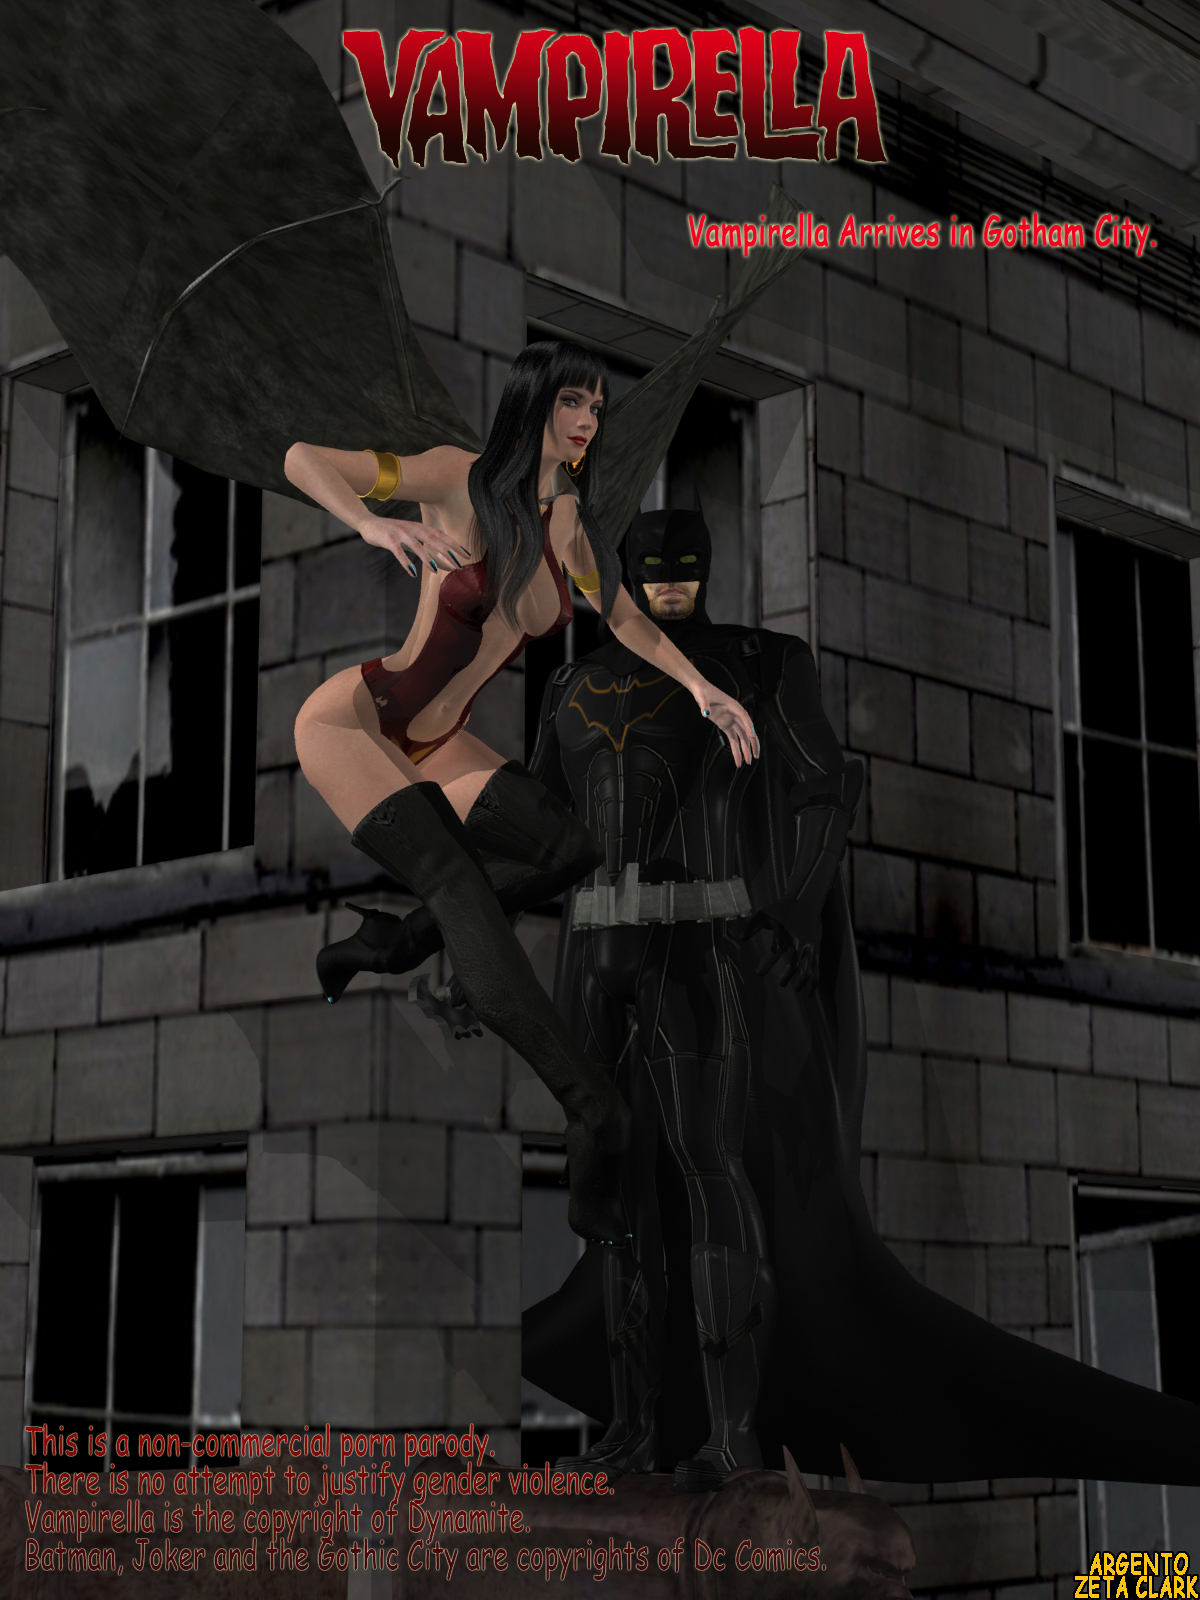 Vampirella Arrives in Gotham City by Argento